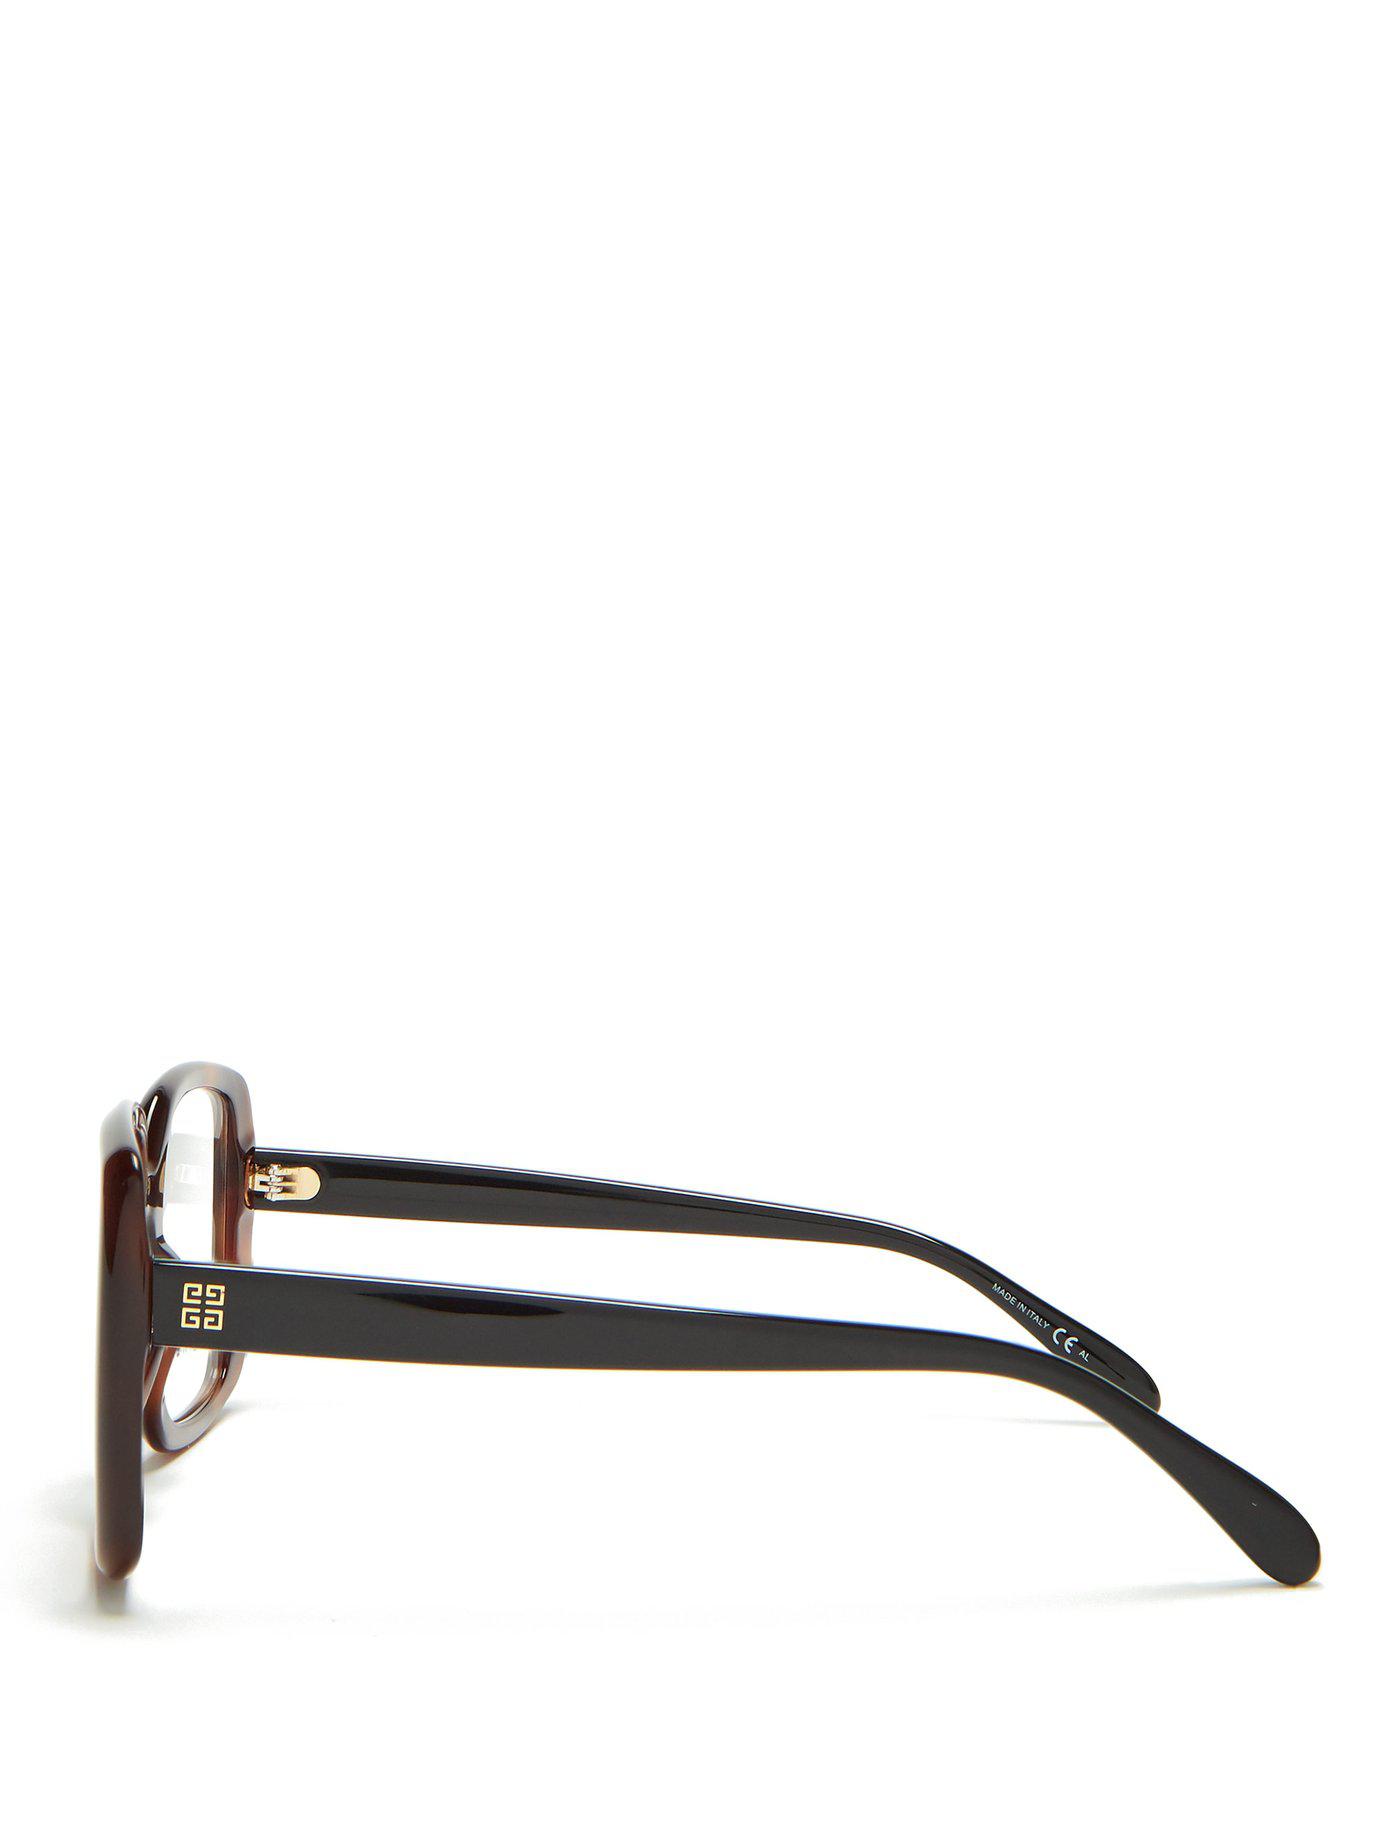 Buy Freckles Mark Vintage Retro Oversized 70s Sunglasses for Men Women  Shield Disco Glasses, Black Tortoise Brown, oversize at Amazon.in